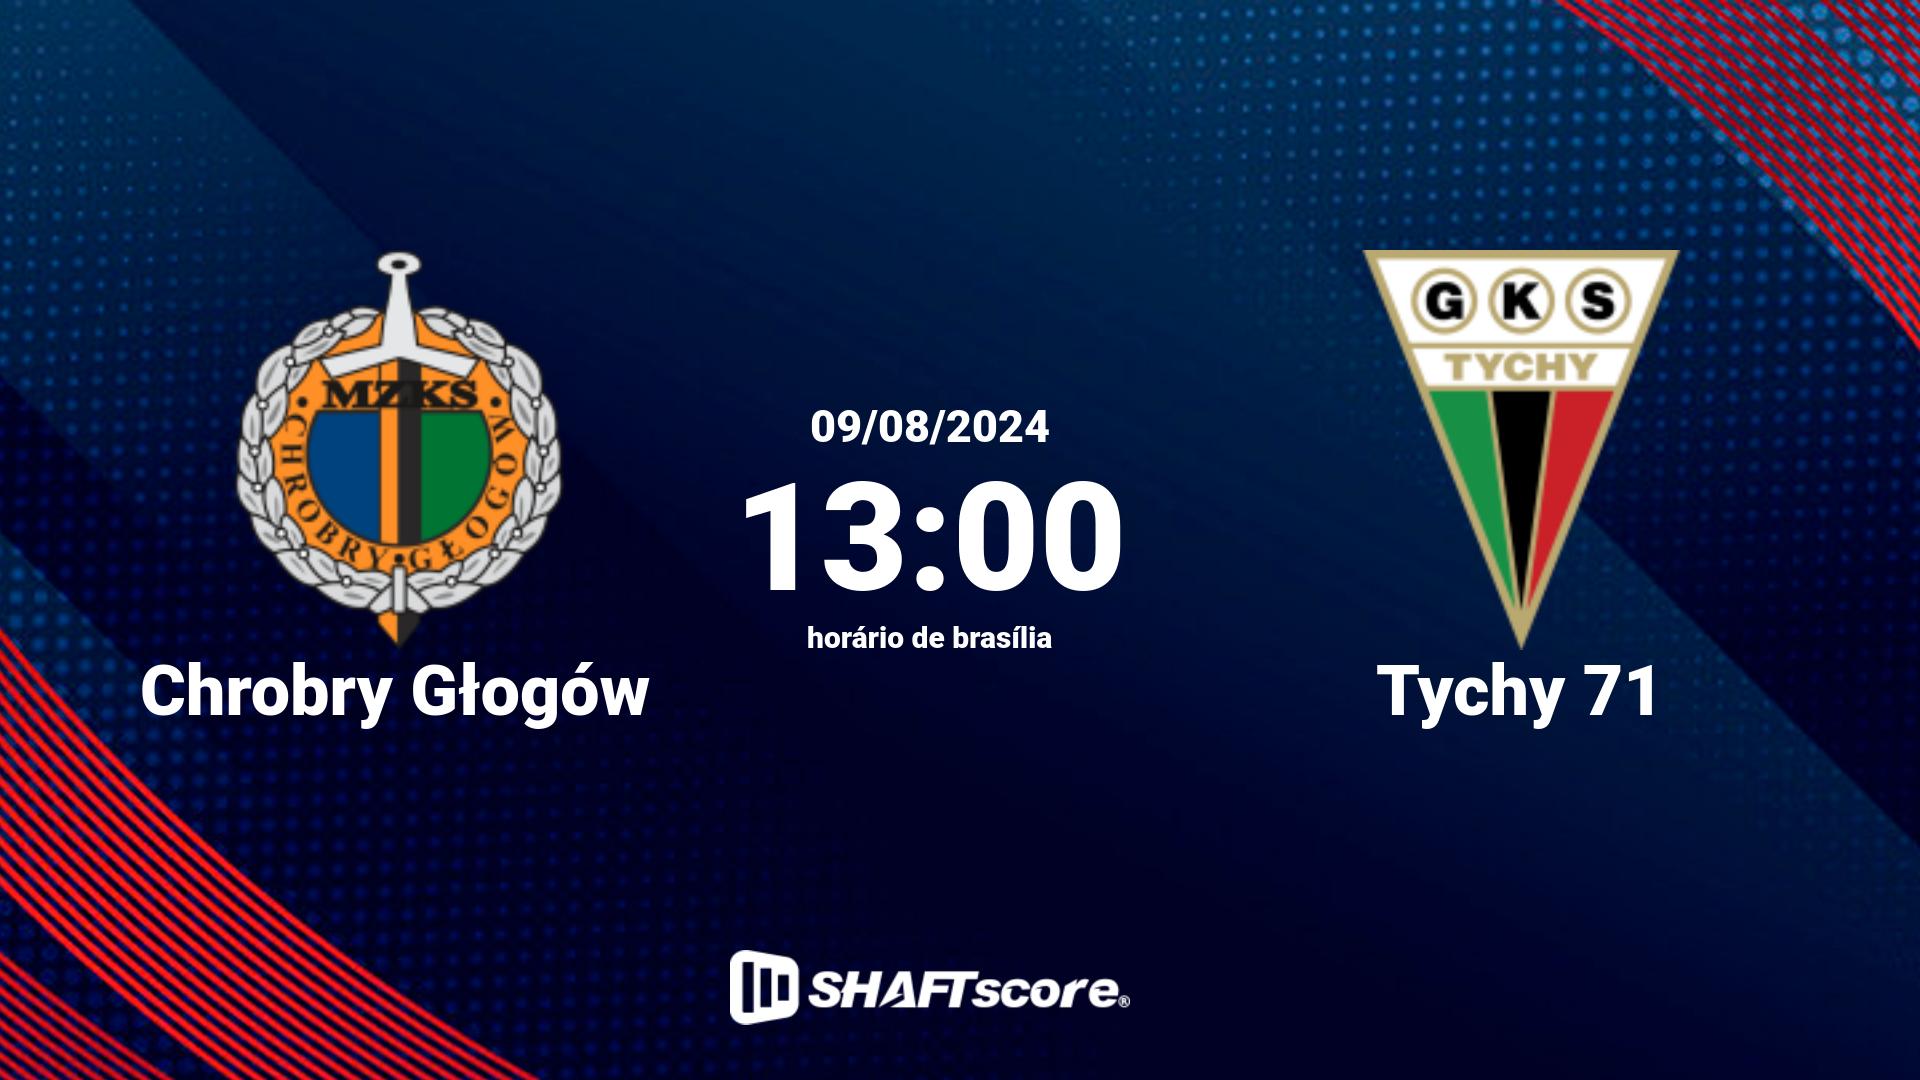 Estatísticas do jogo Chrobry Głogów vs Tychy 71 09.08 13:00